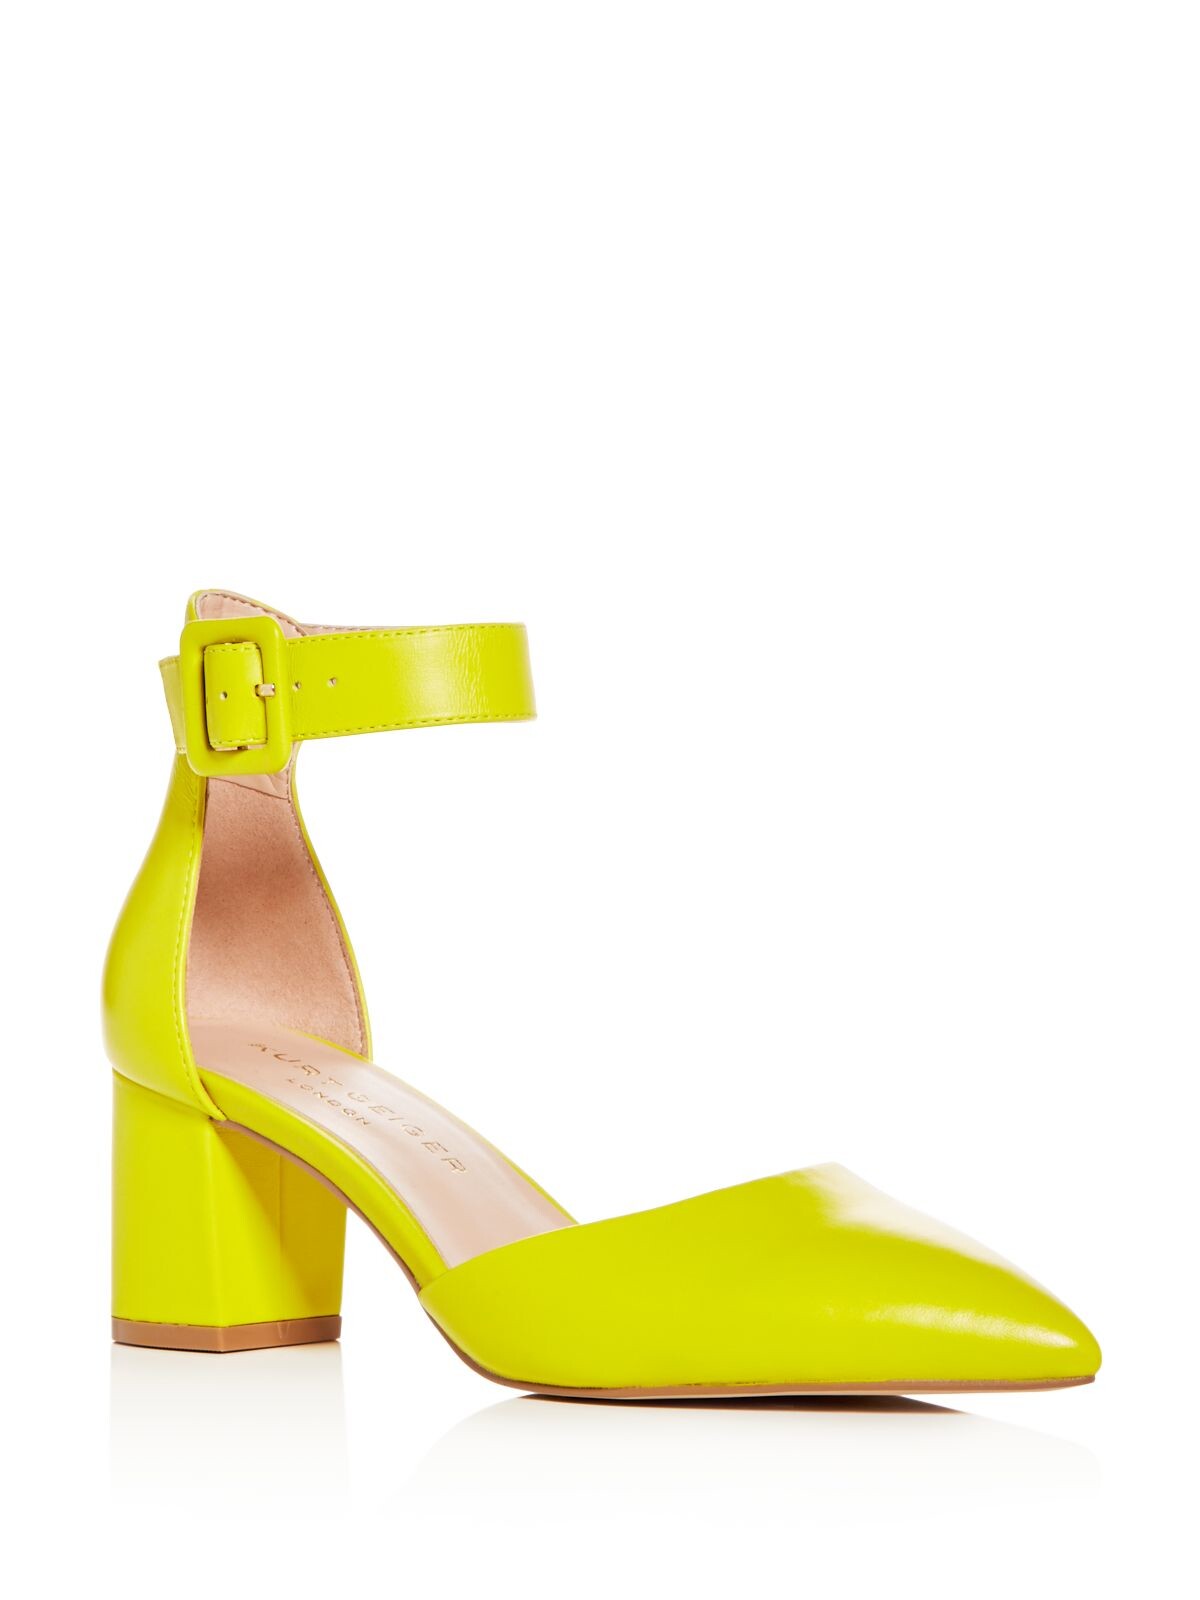 KURT GEIGER Womens Yellow Ankle Strap Breathable Burlington Pointed Toe Block Heel Buckle Leather Dress Pumps 36.5